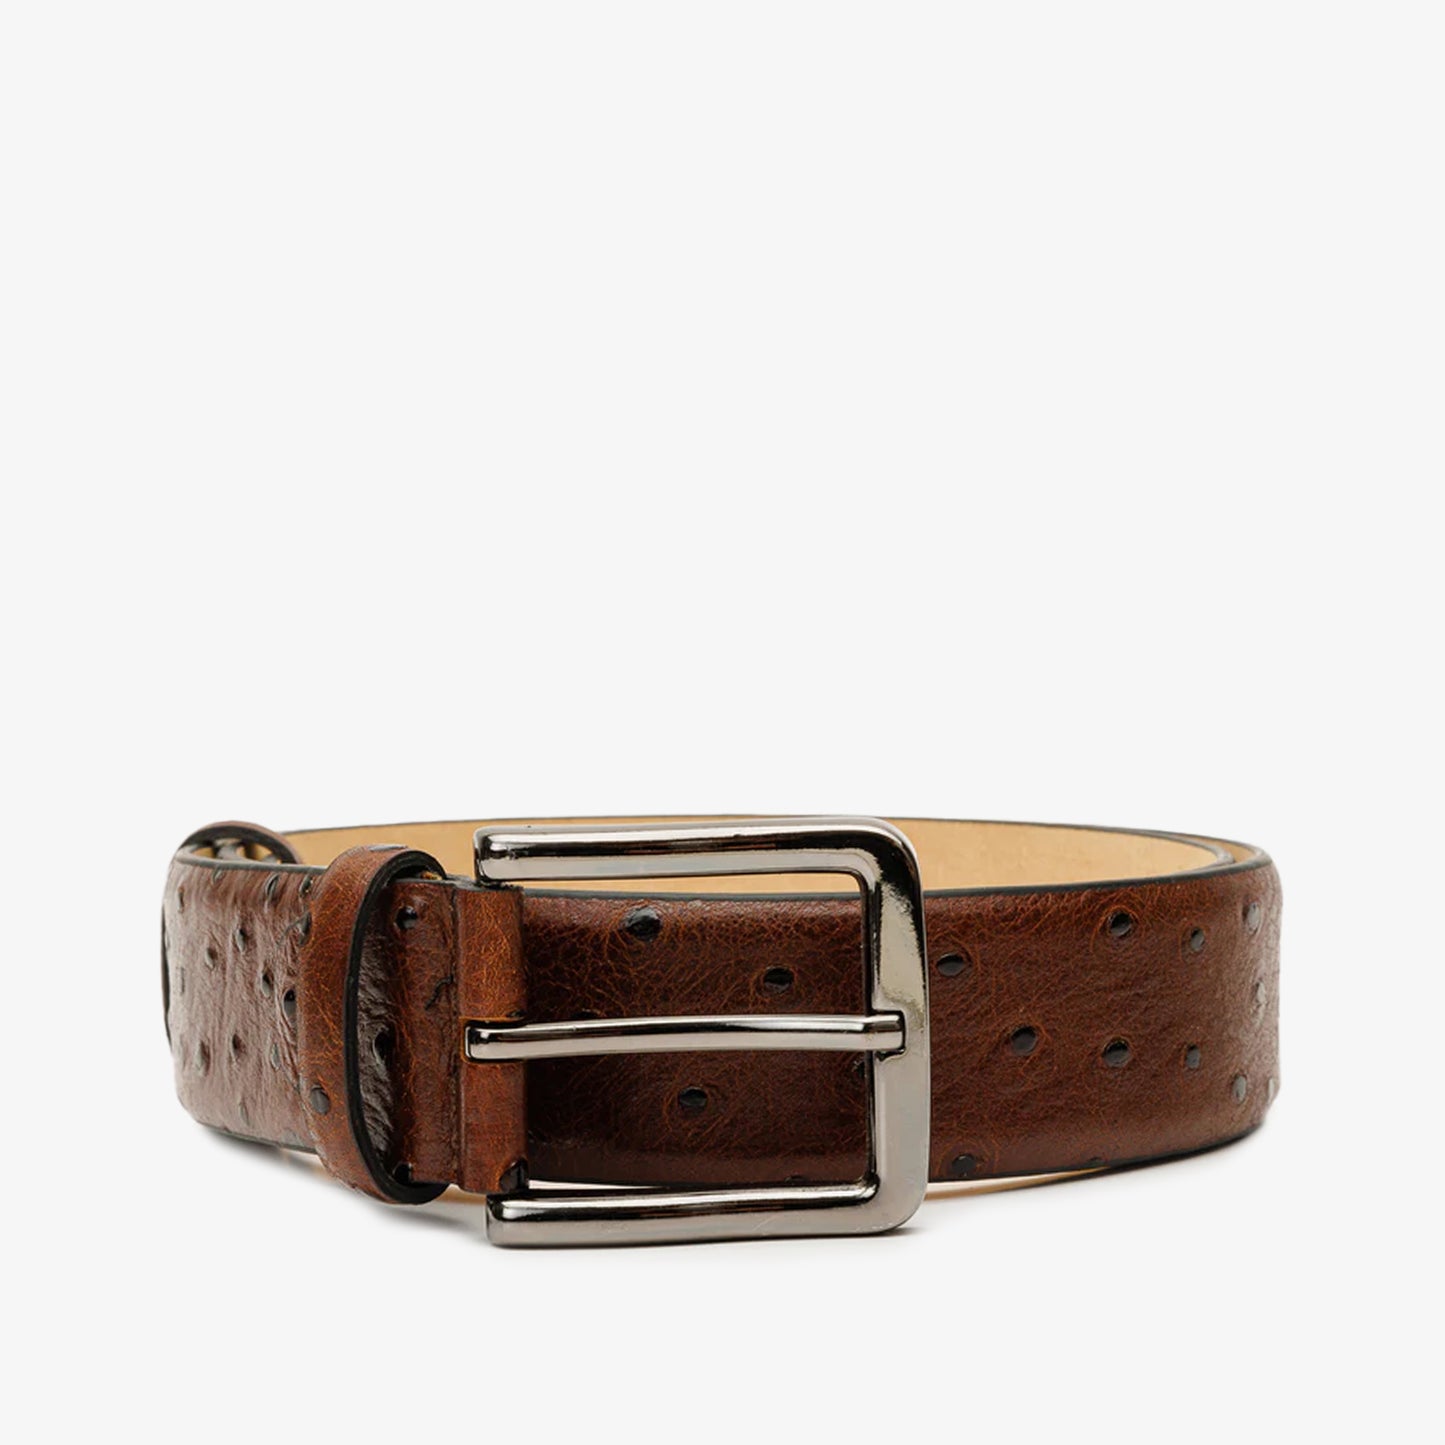 The Johannesburg Brown Leather Belt